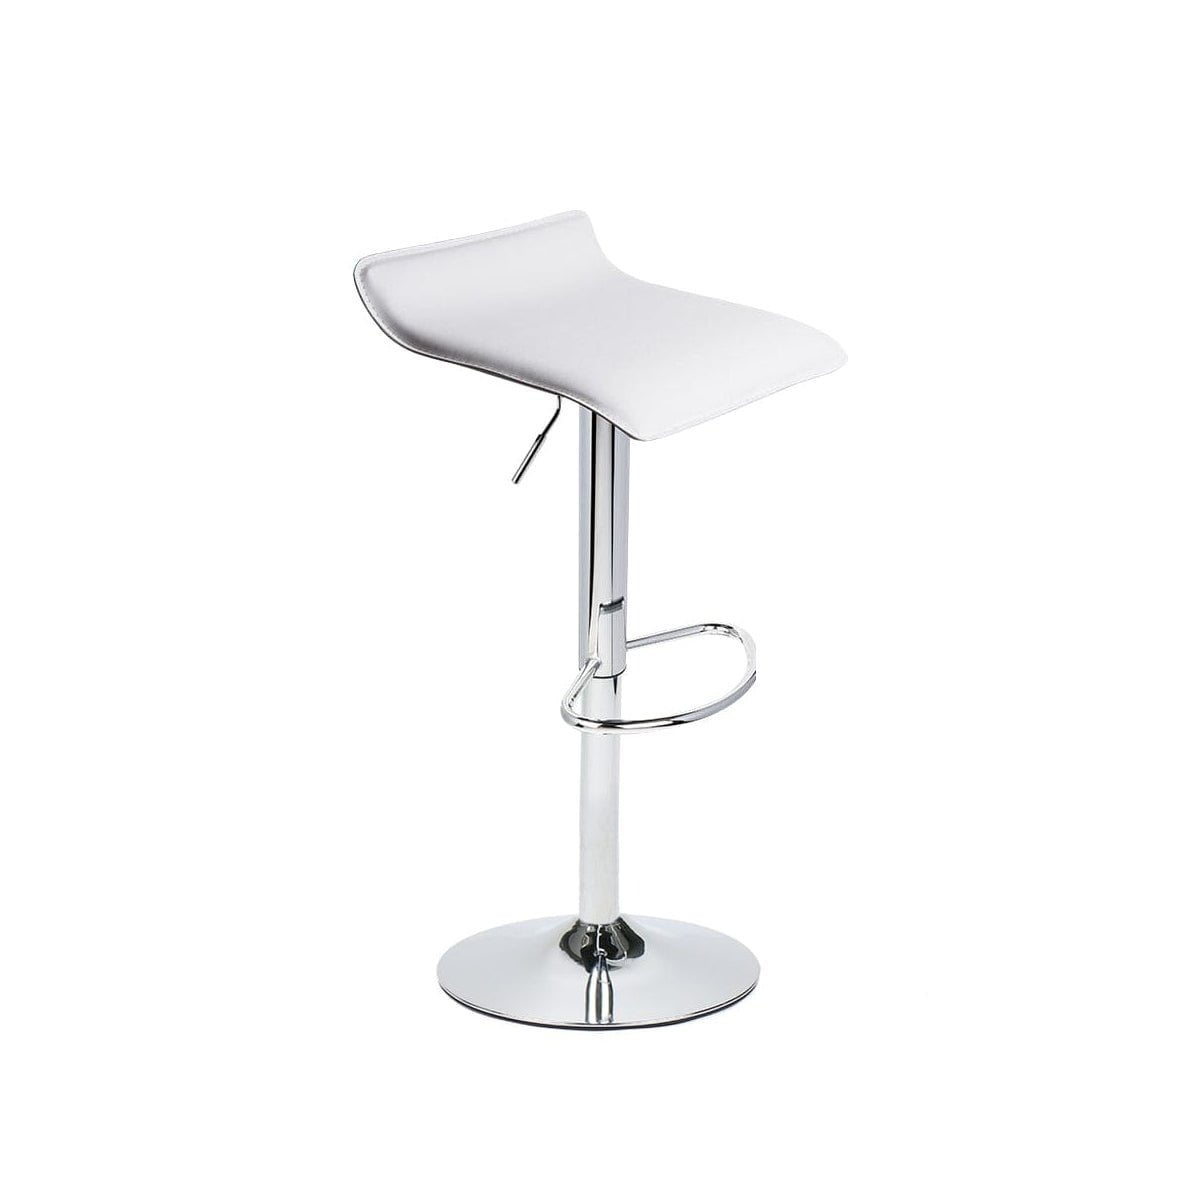 Elecwish white bar stool OW002